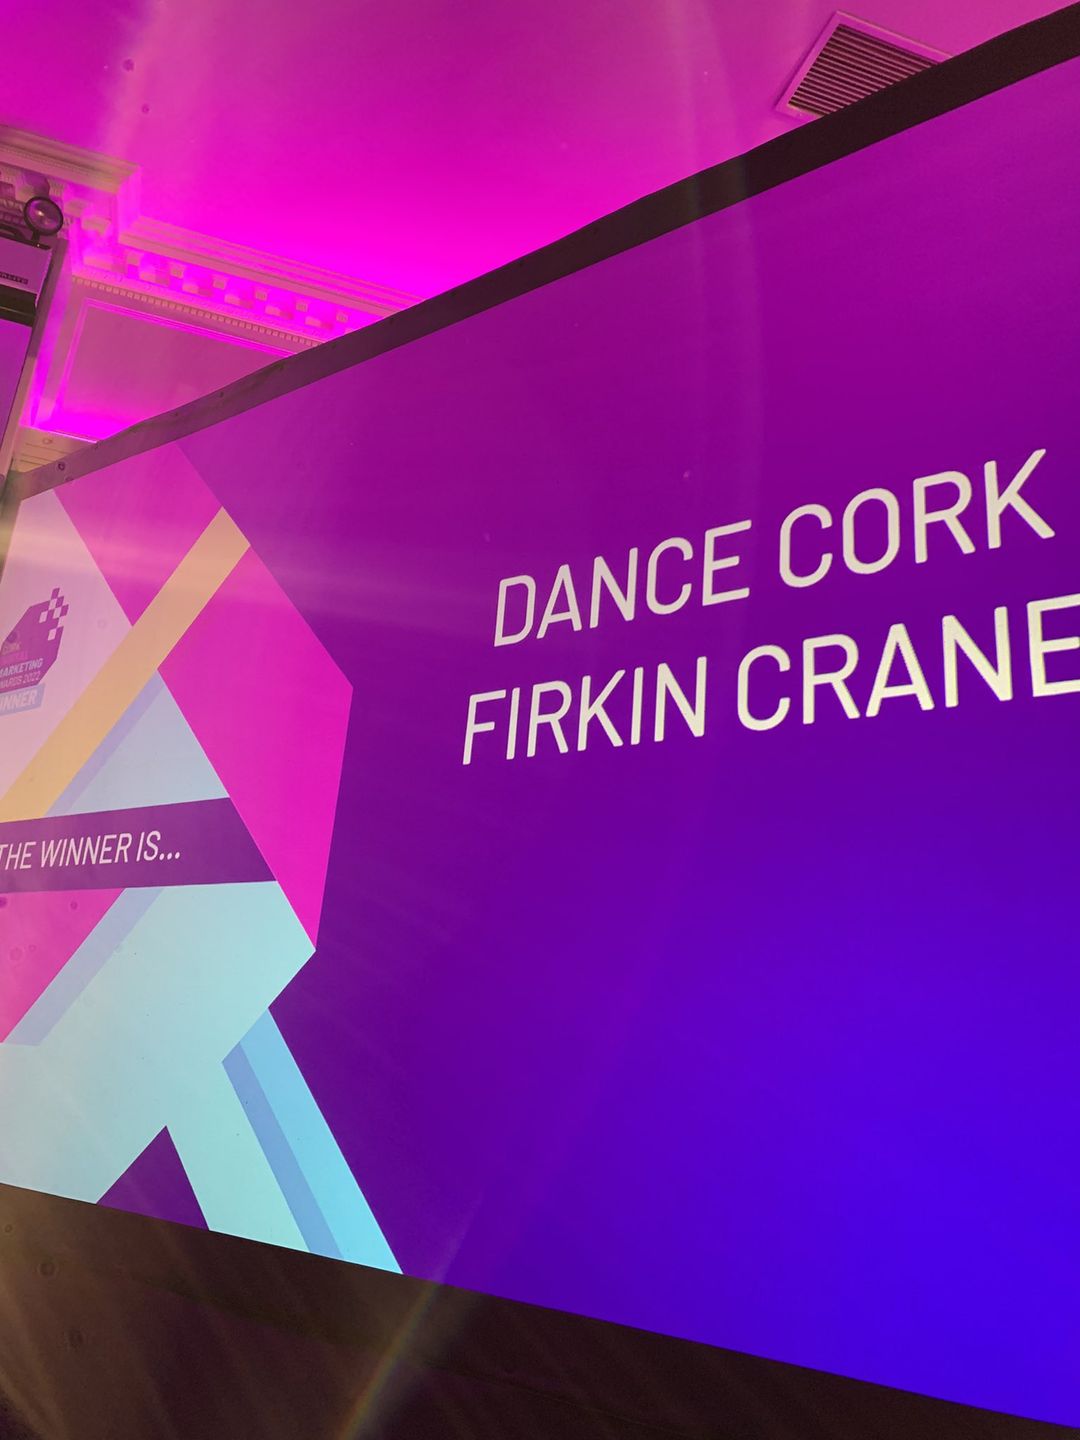 Firkin Crane Theatre, Cork: Dance Cork Firkin Crane WINS BEST WEBSITE AT CORK DIGITAL MARKETING AWARDS 2022